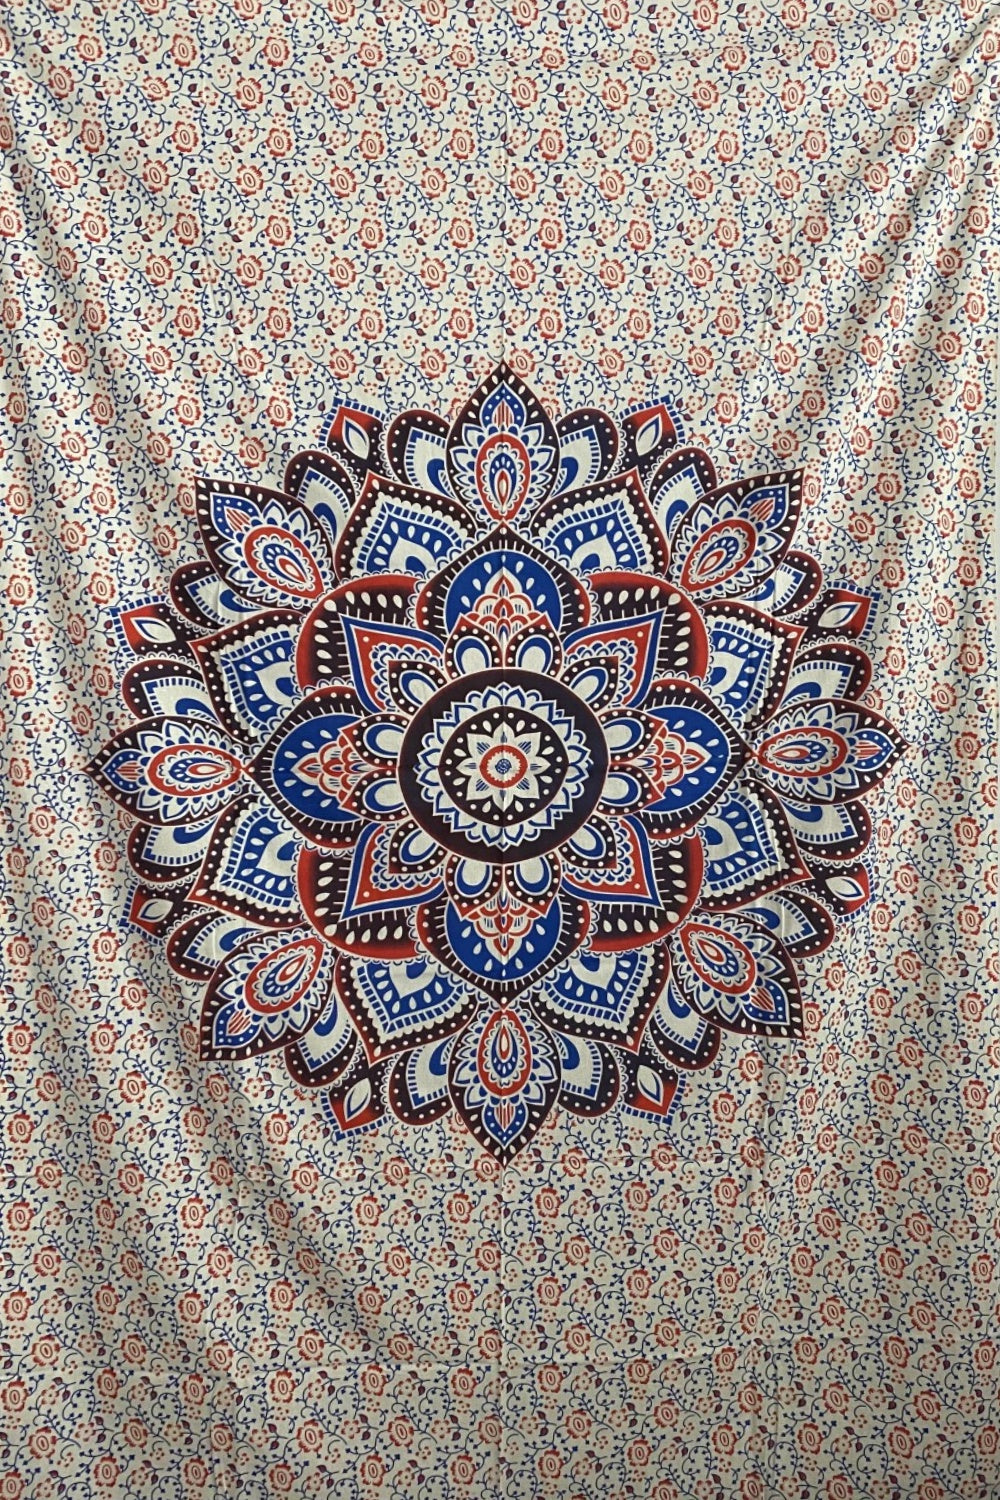 Sunshine Joy - Zest For Life Red & Blue Mandala Tapestry 52x80